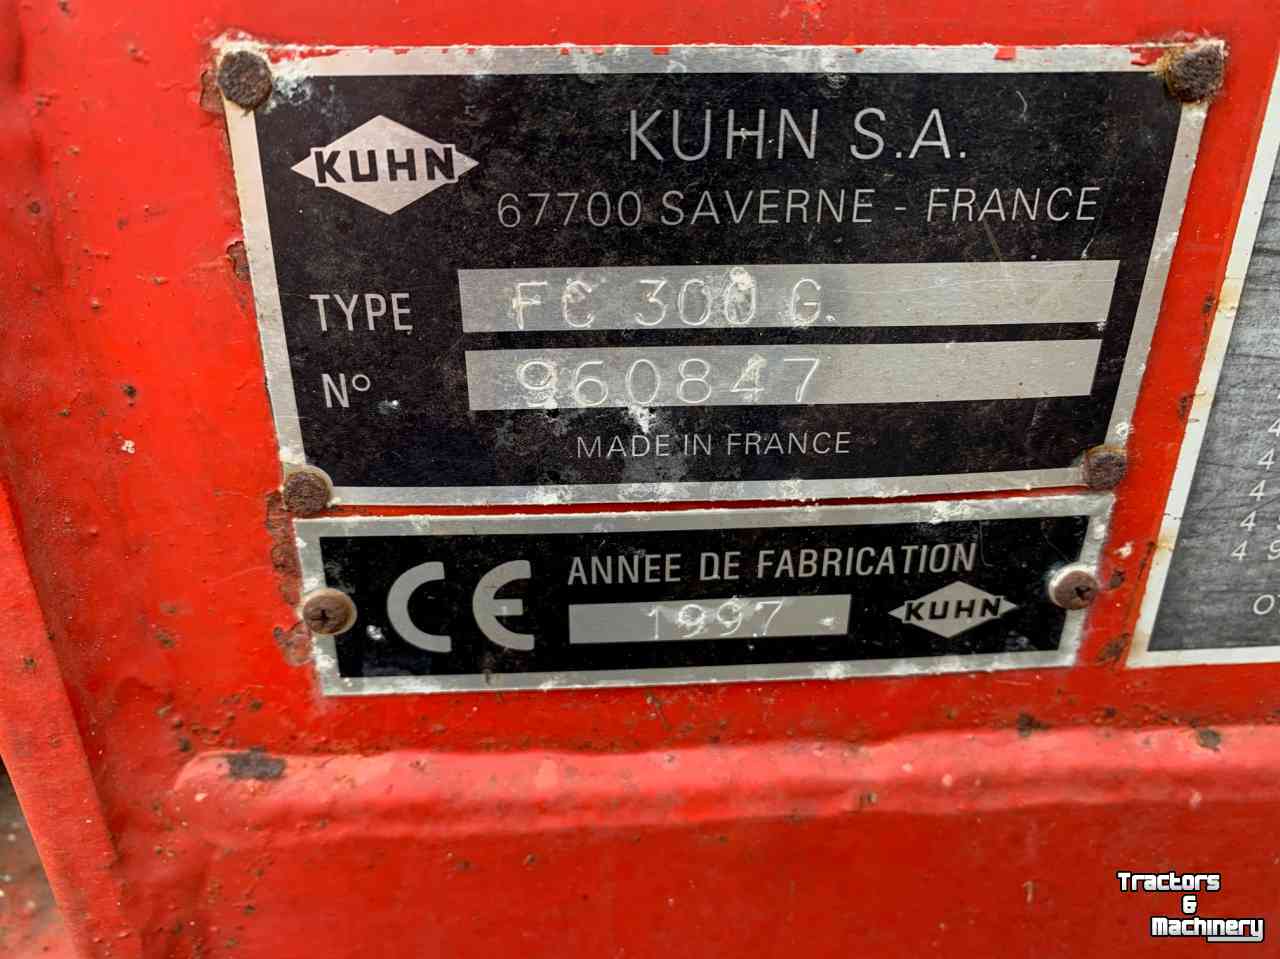 Faucheuse Kuhn FC 300G